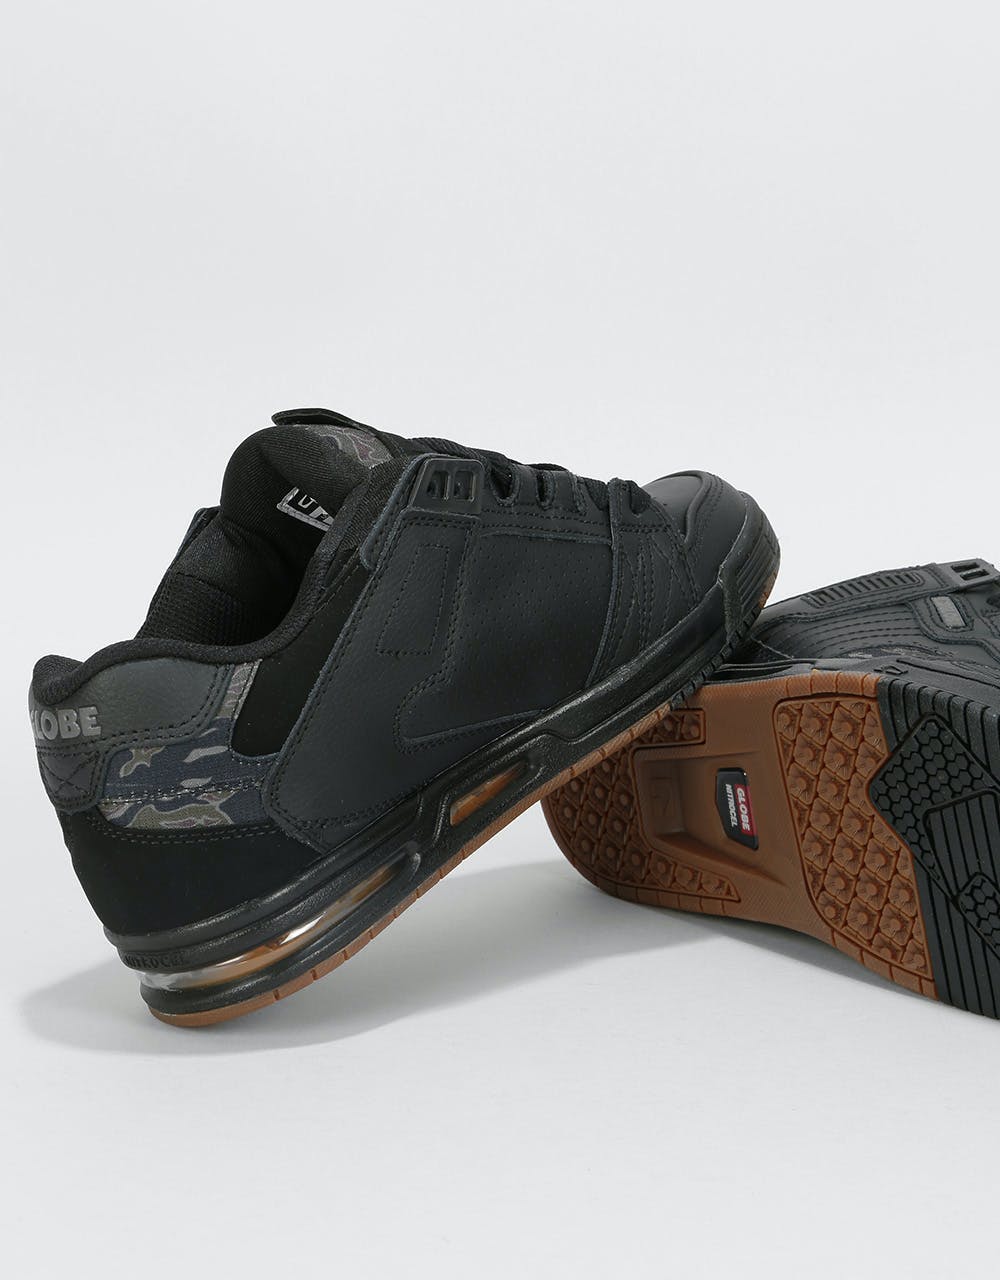 Globe Sabre Skate Shoes - Black/Tiger Camo